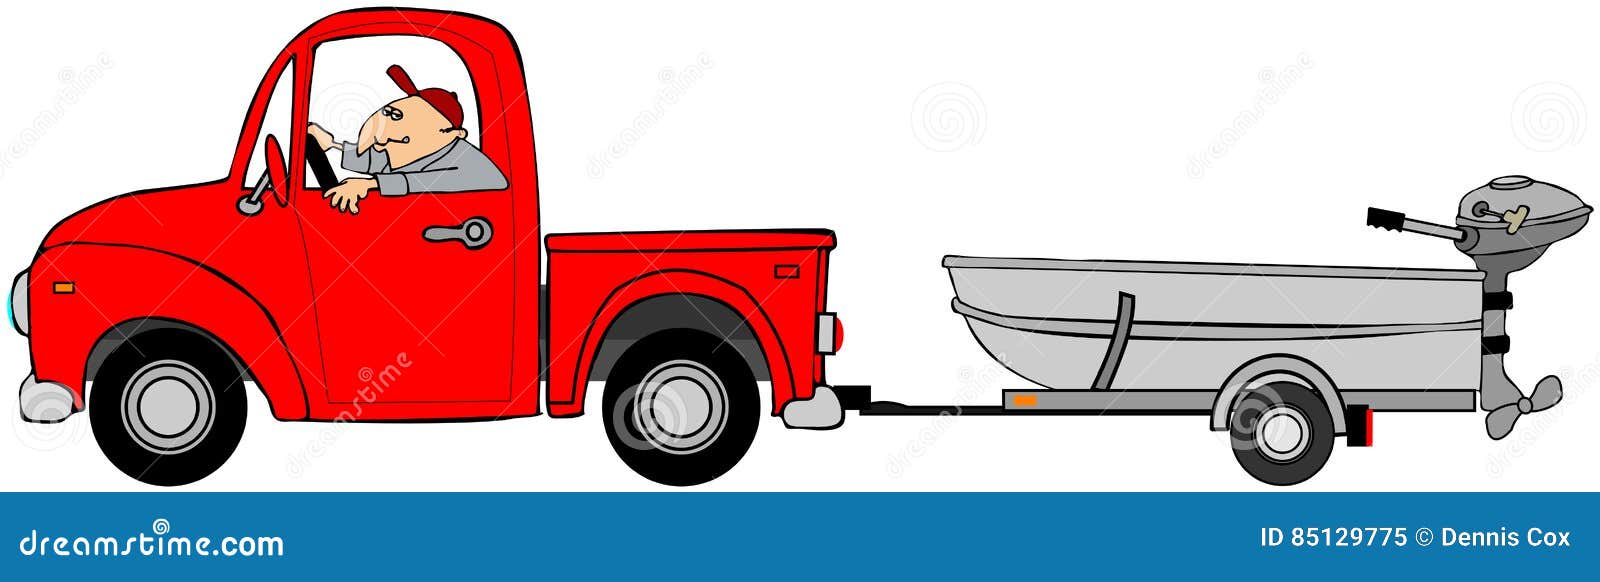 Truck Pulling An Aluminum Boat Stock Illustration - Image 